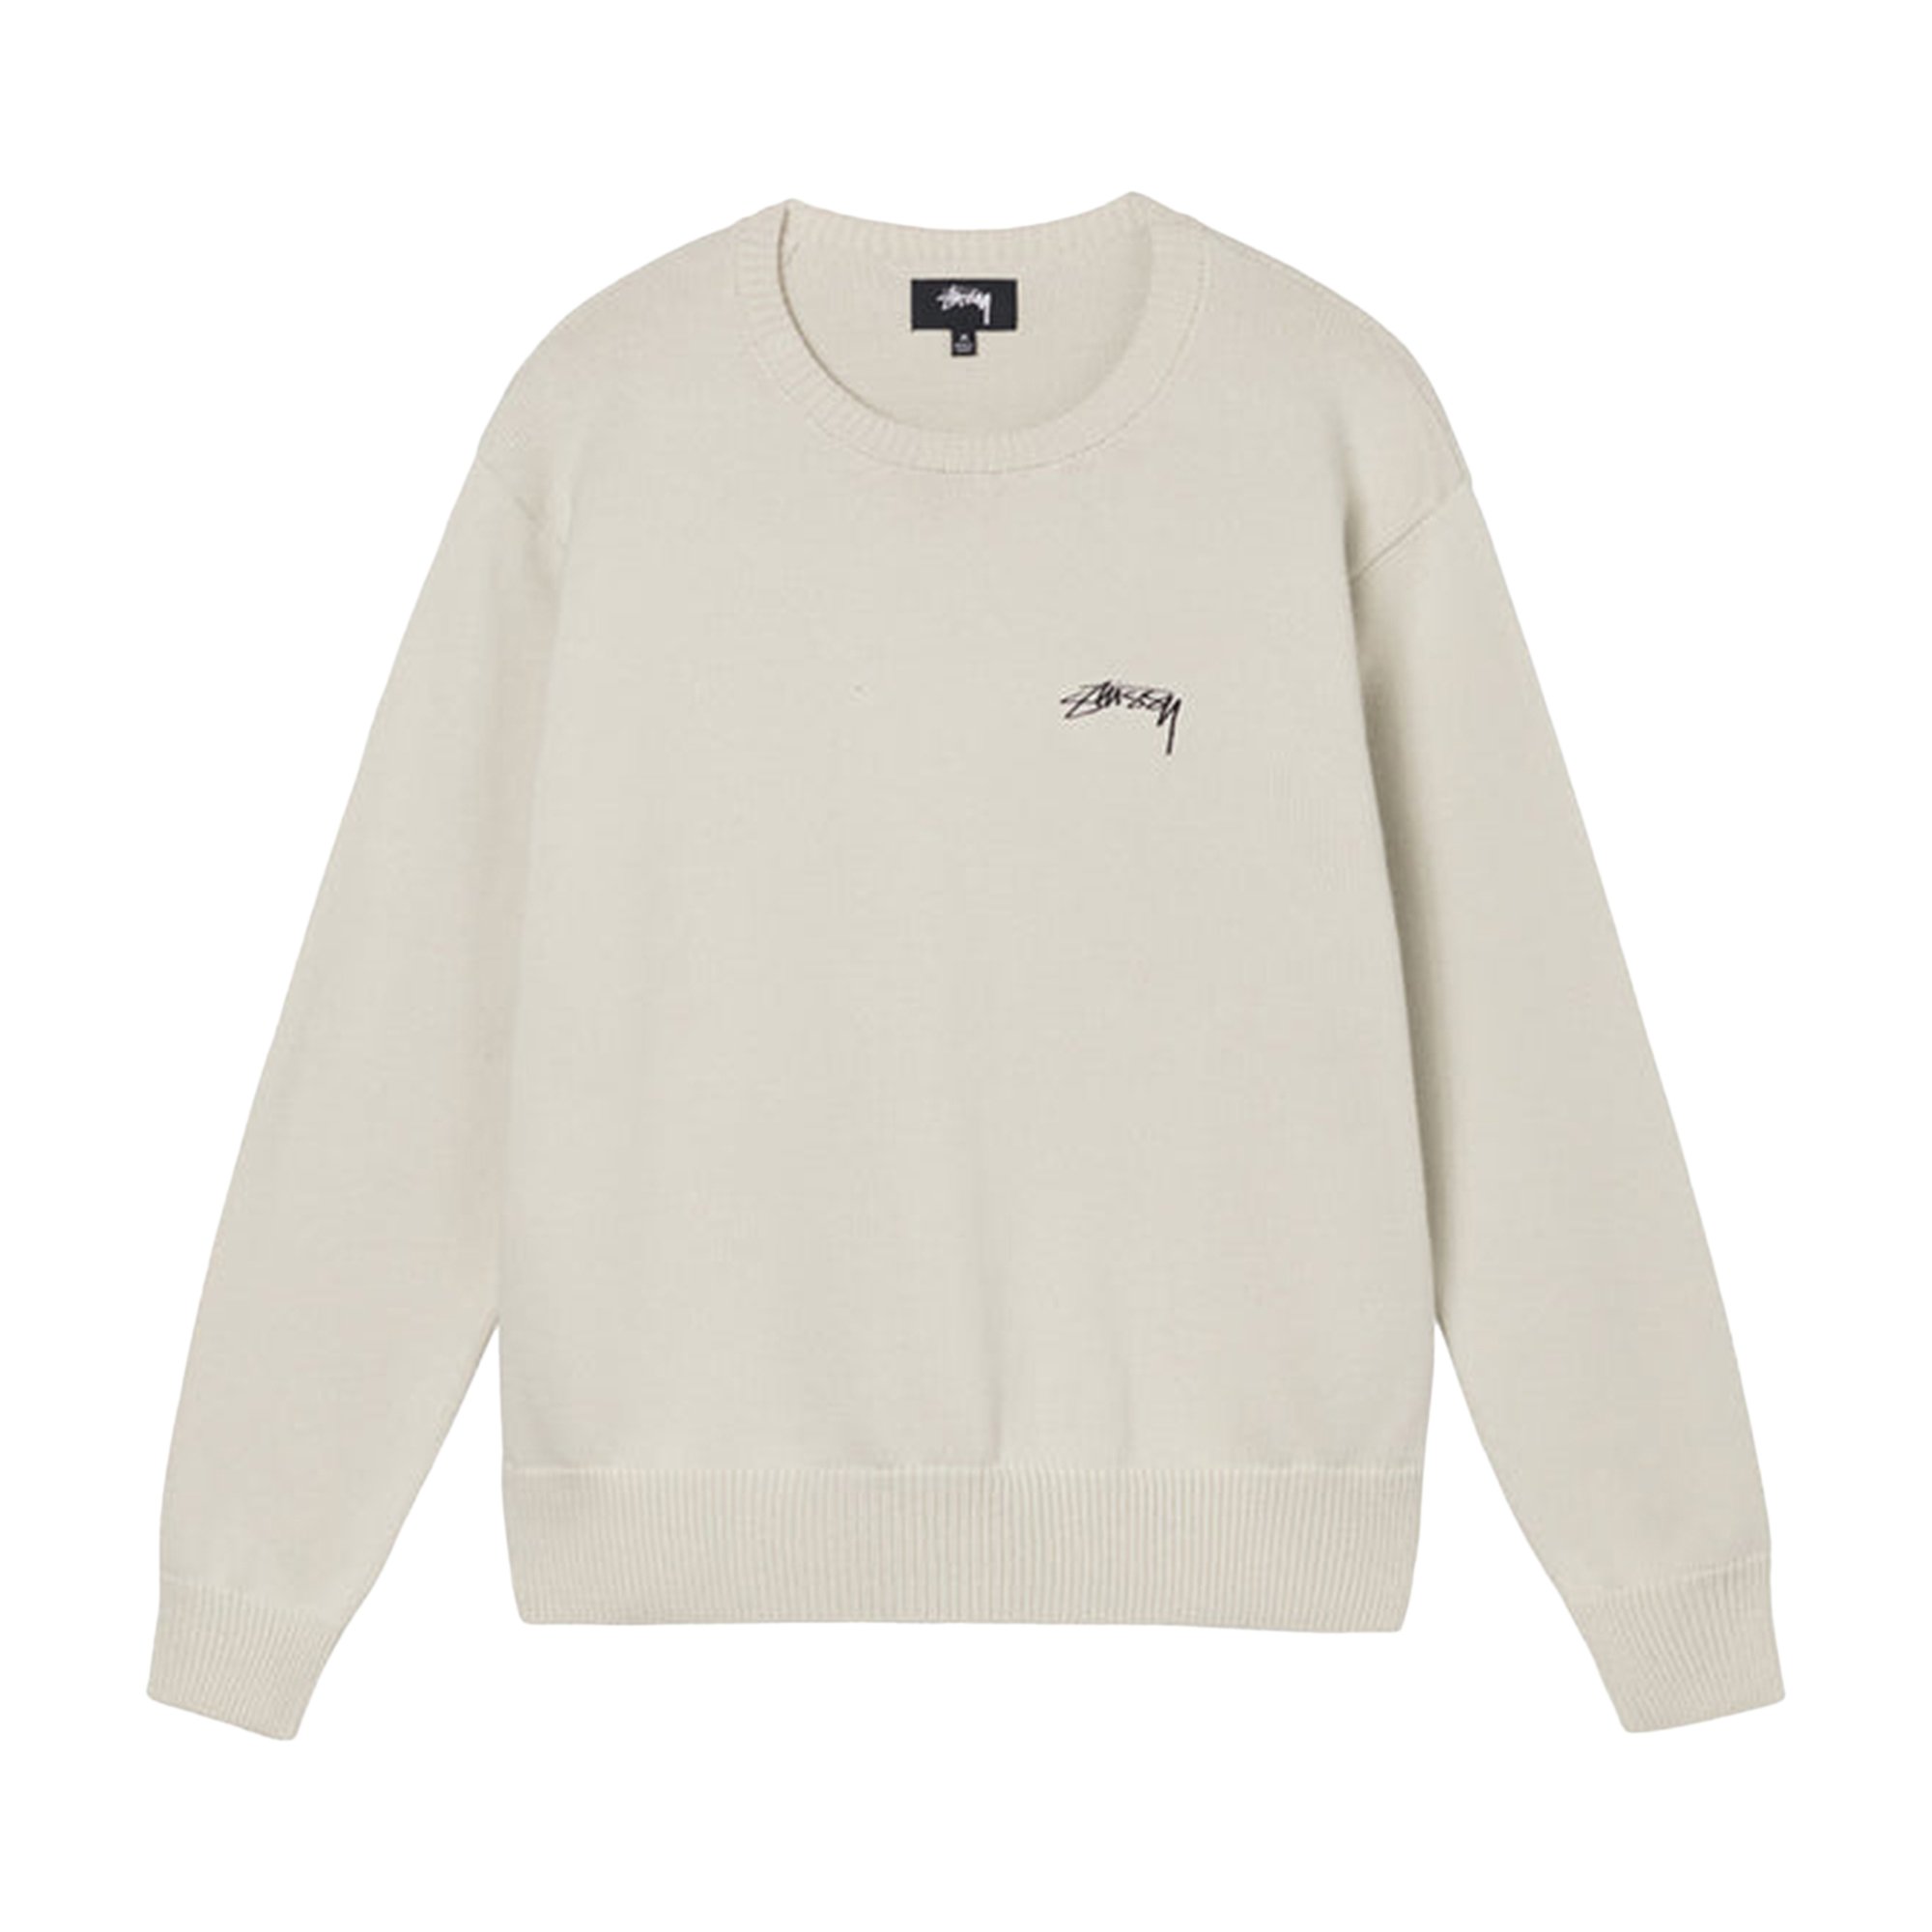 Buy Stussy Care Label Sweater 'Natural' - 117140 NATU | GOAT